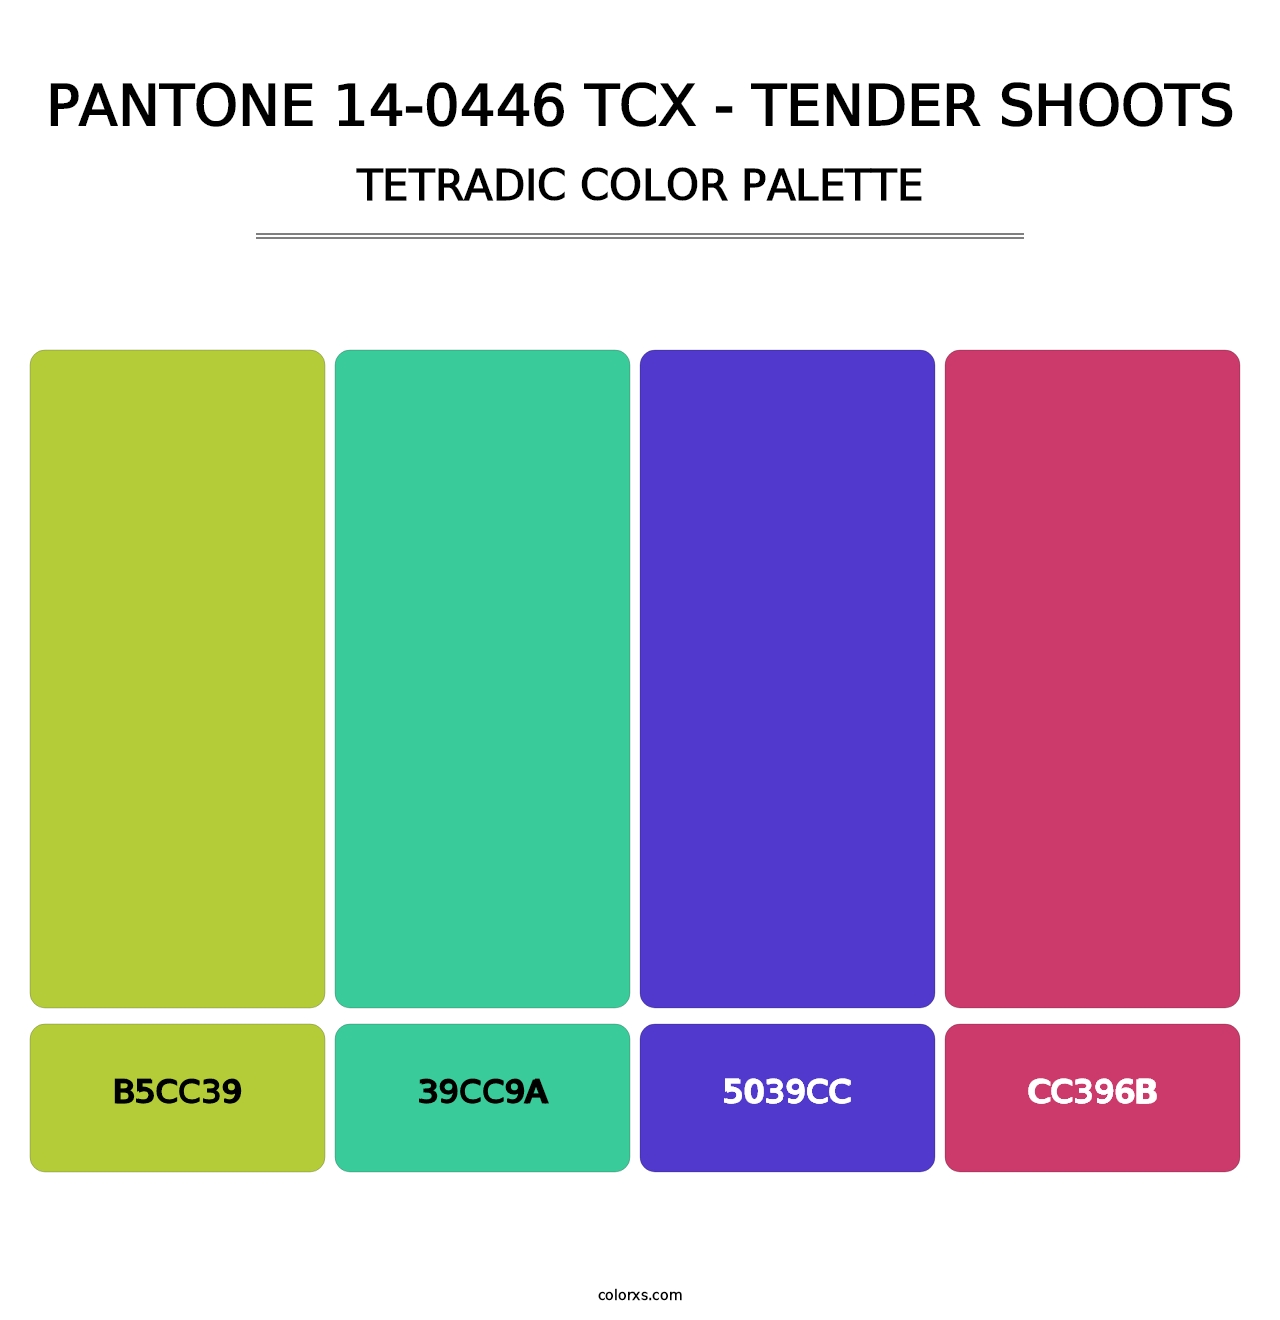 PANTONE 14-0446 TCX - Tender Shoots - Tetradic Color Palette